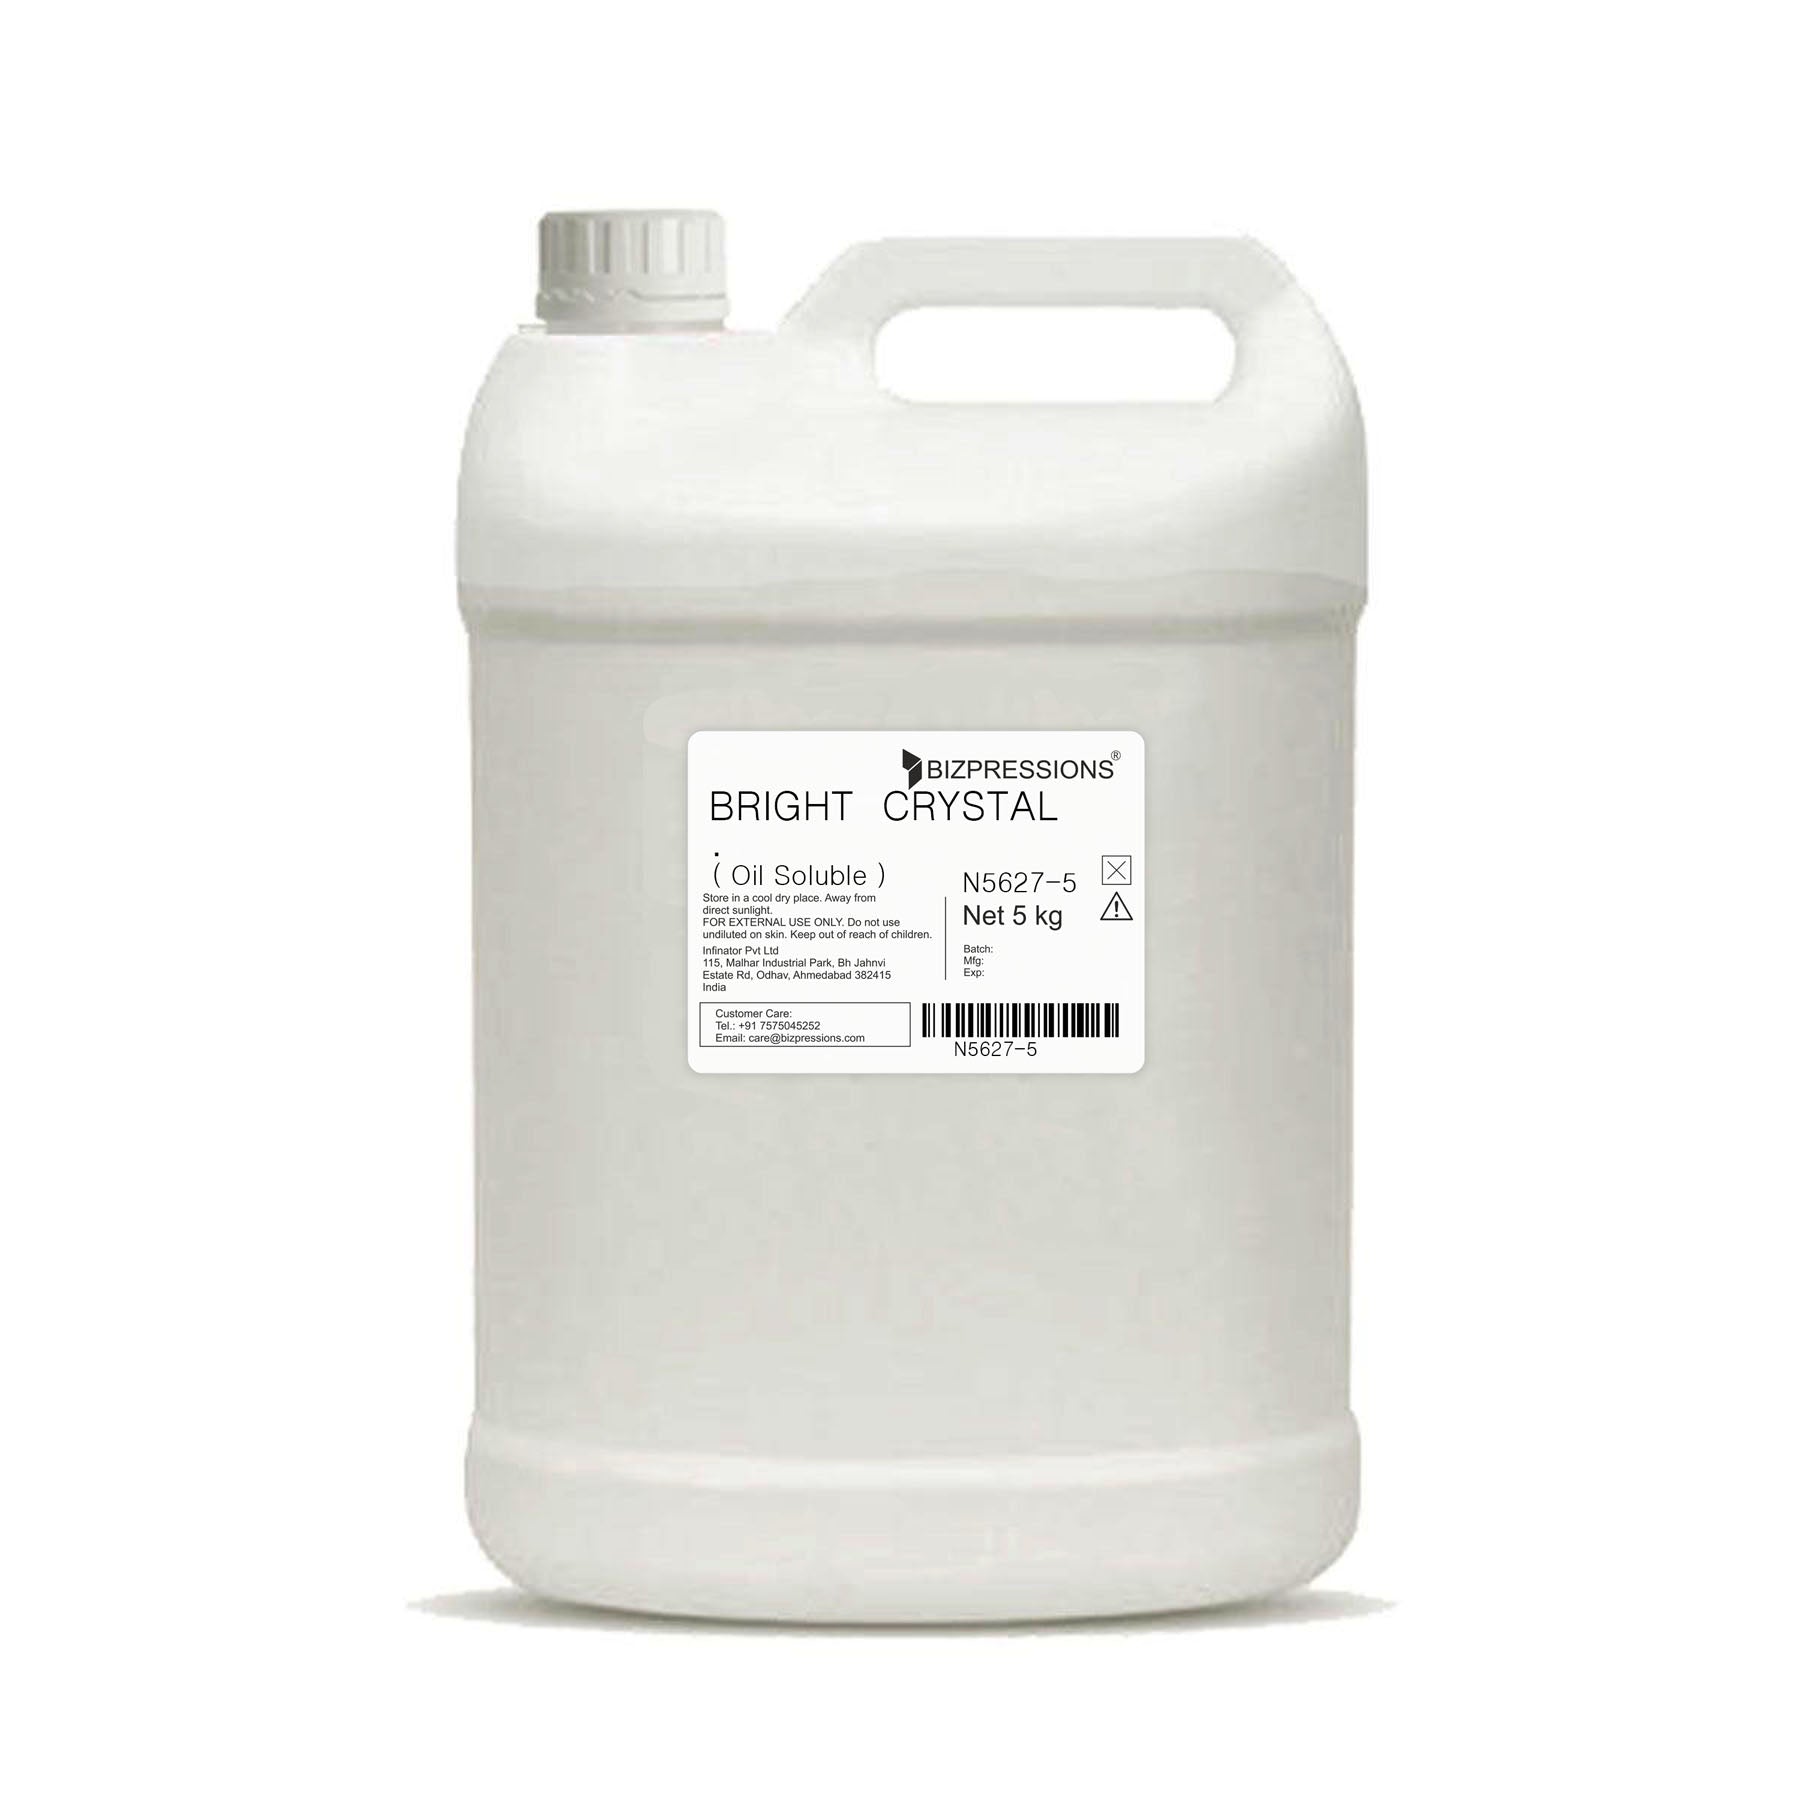 BRIGHT CRYSTAL - Fragrance ( Oil Soluble ) - 5 kg